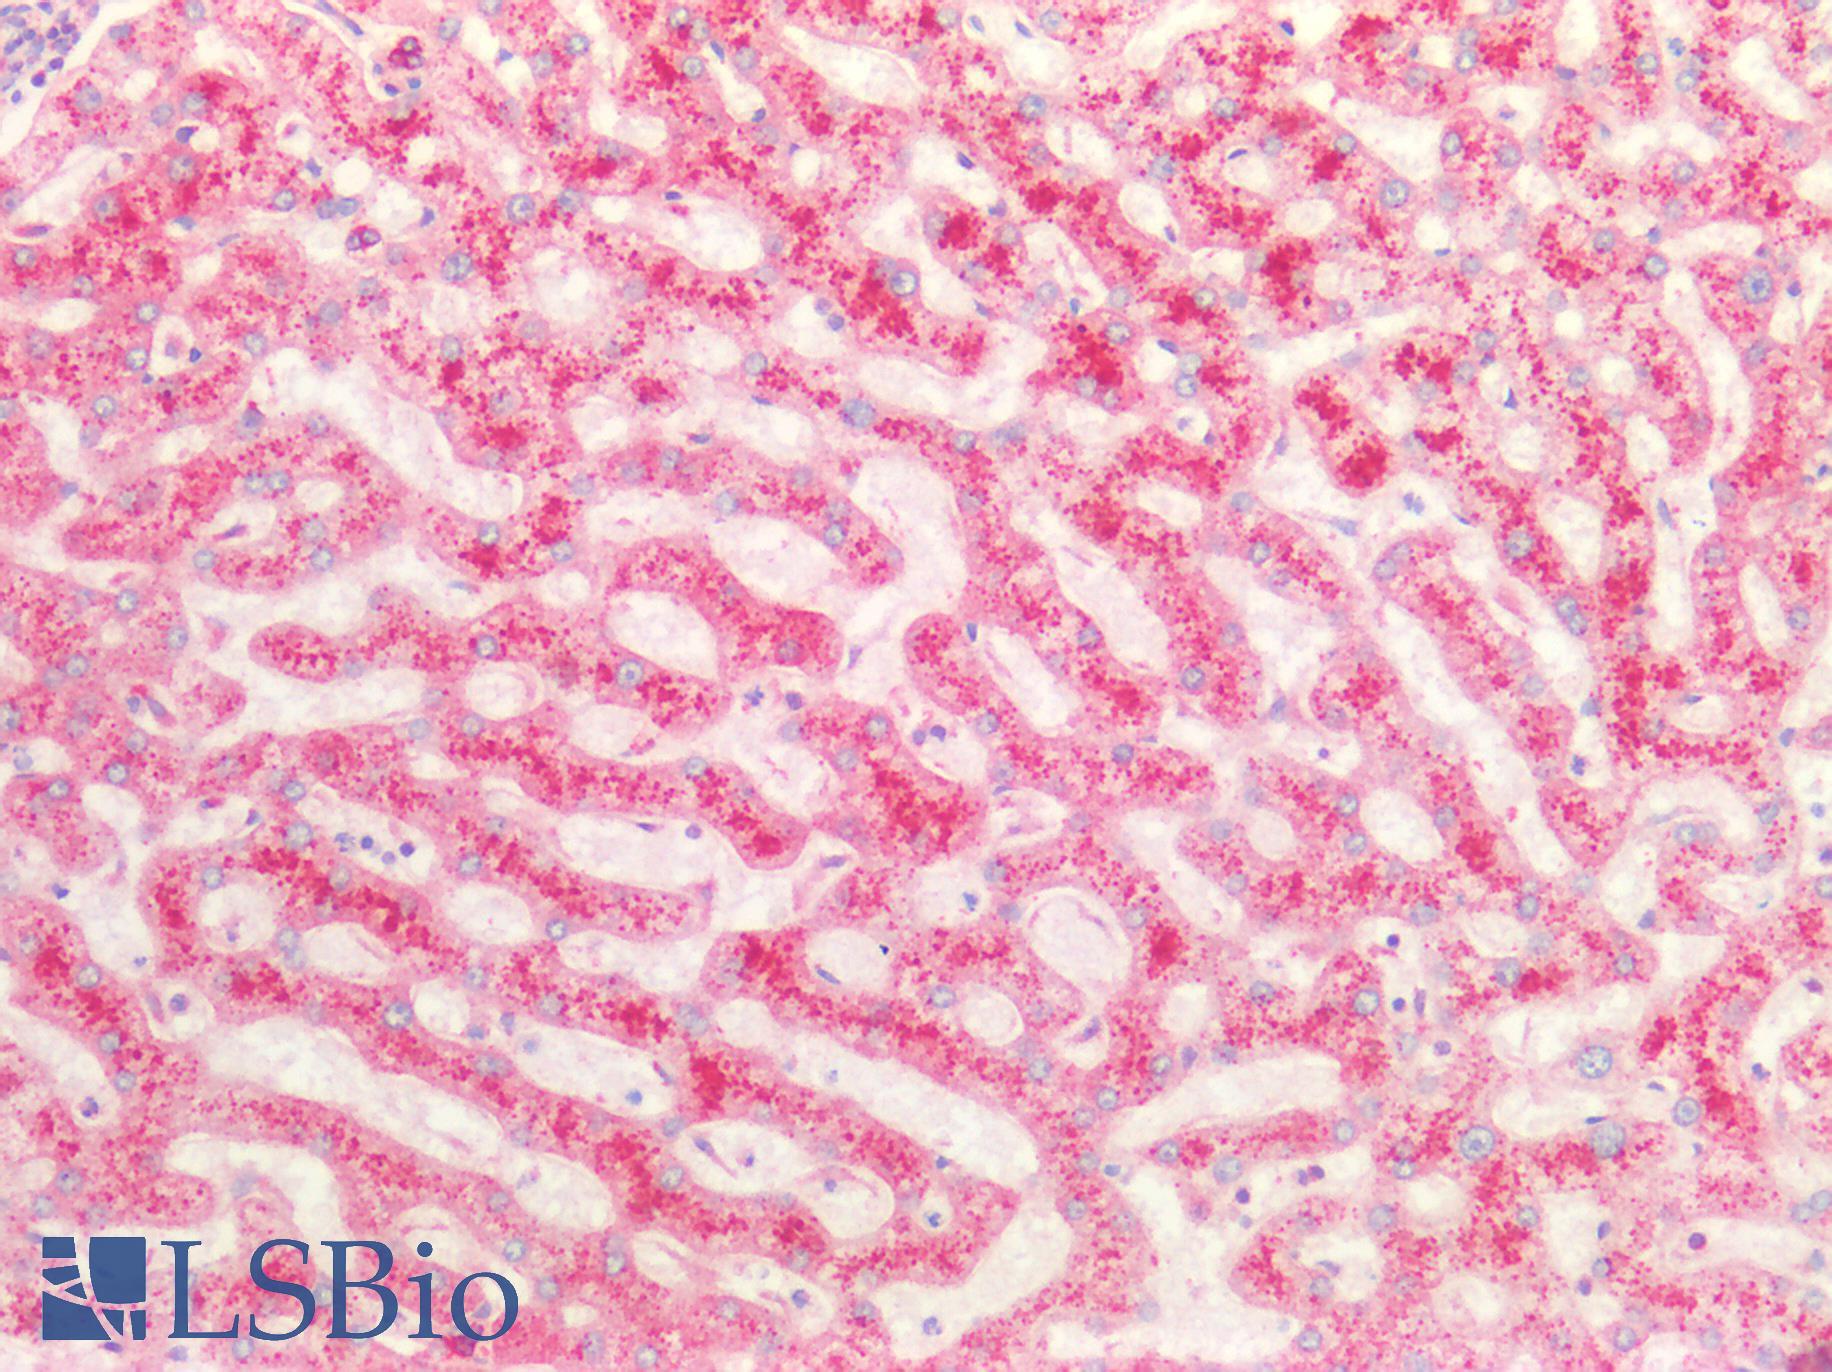 POSTN / Periostin Antibody - Human Liver: Formalin-Fixed, Paraffin-Embedded (FFPE)